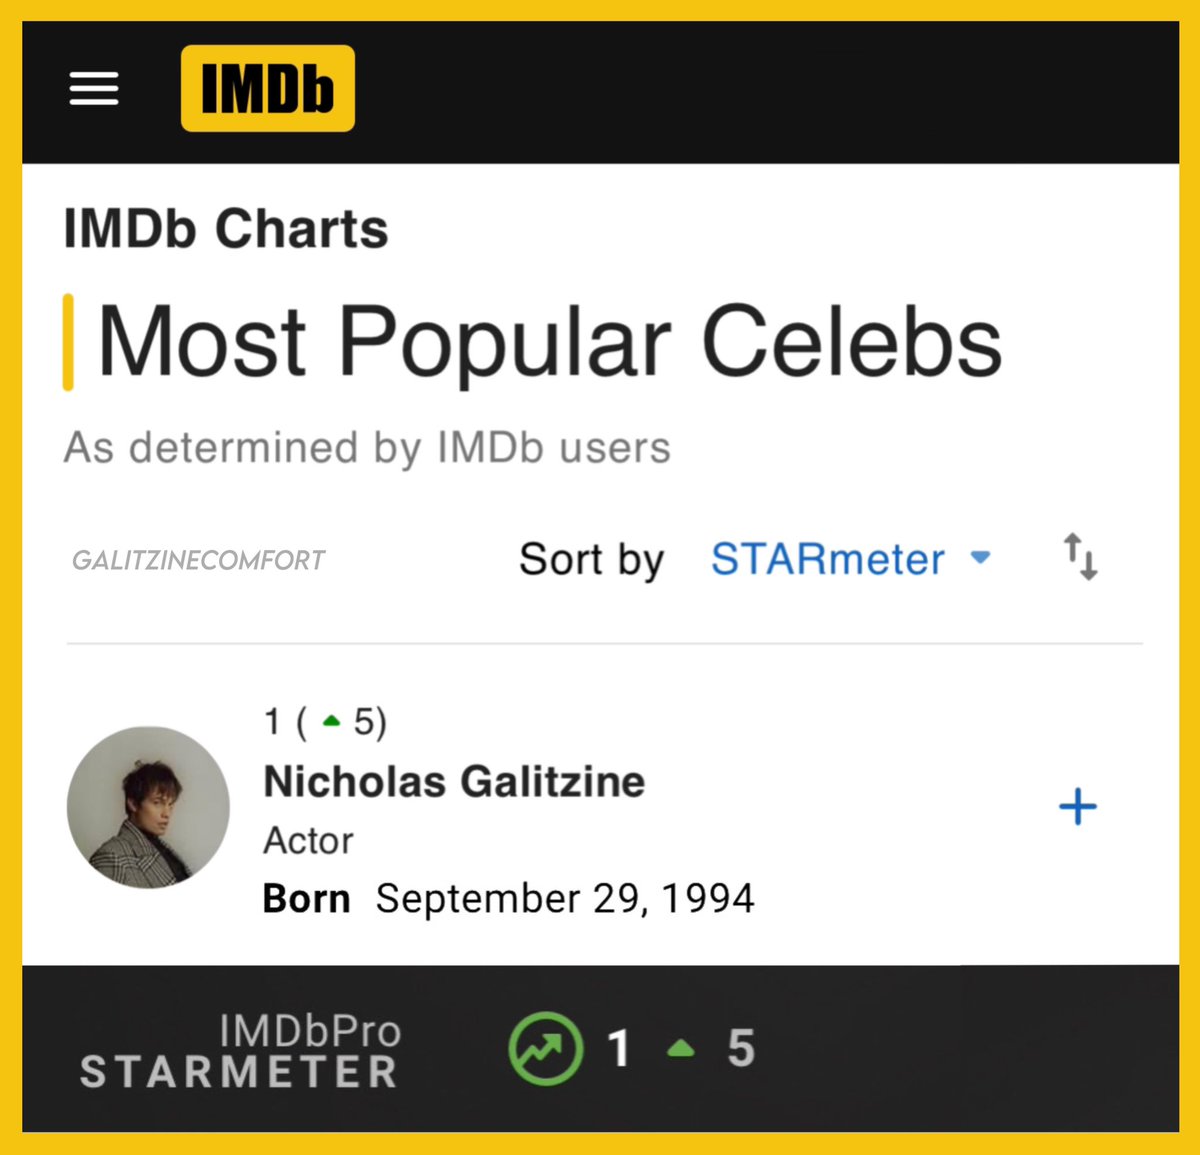 Nicholas Galitzine is number 1 on @IMDb ‘s Starmeter!!! YASSSSSS Big congrats @nickgalitzine 💛